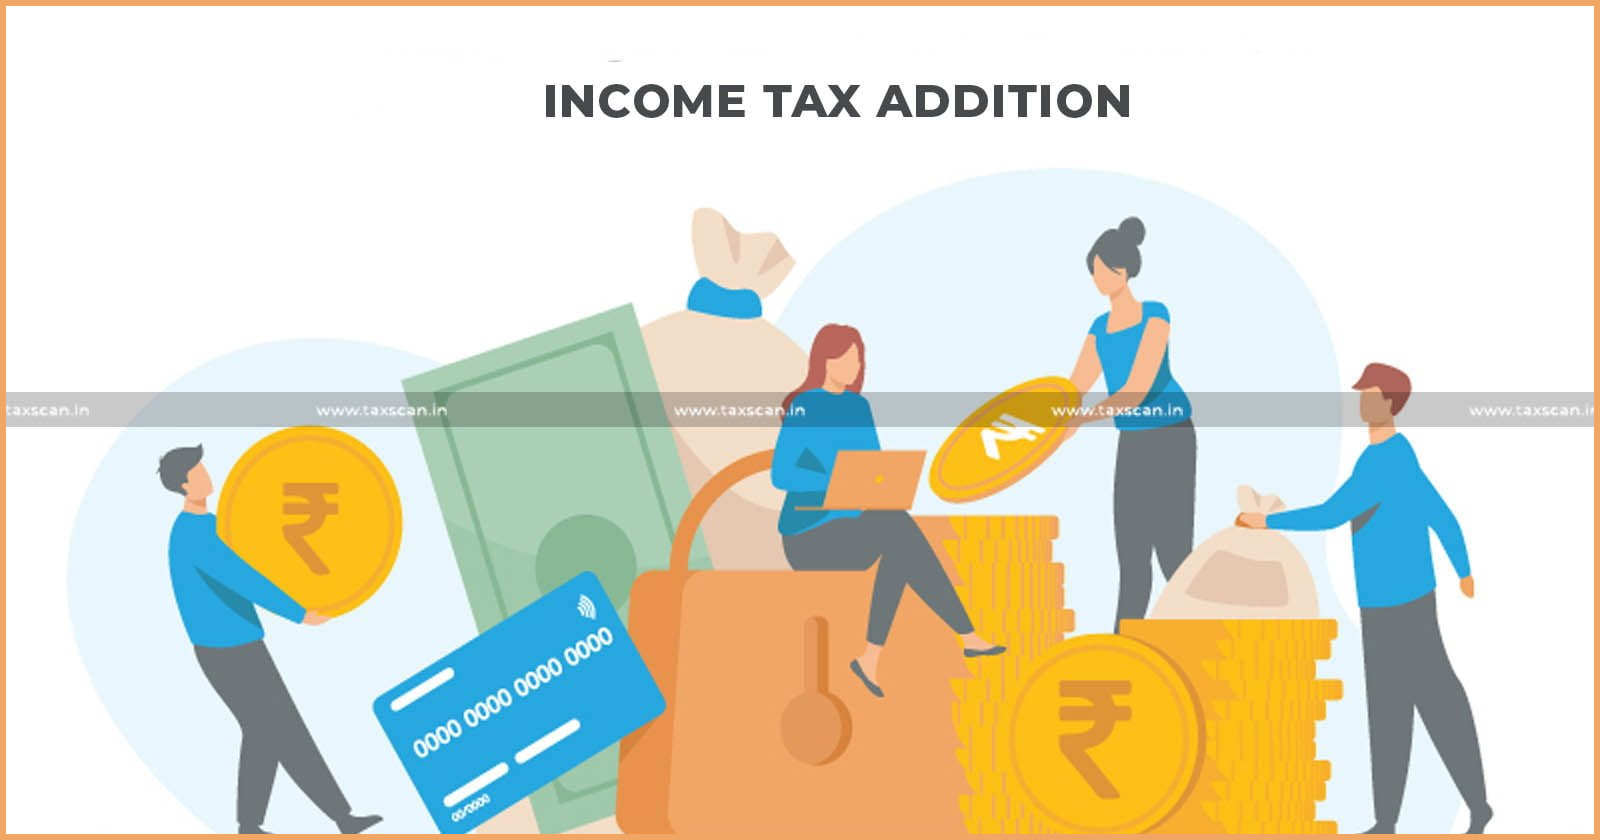 ITAT kolkata - Income Tax Addition - ITAT deletes - Income Tax Appellate Trribunal - taxscan